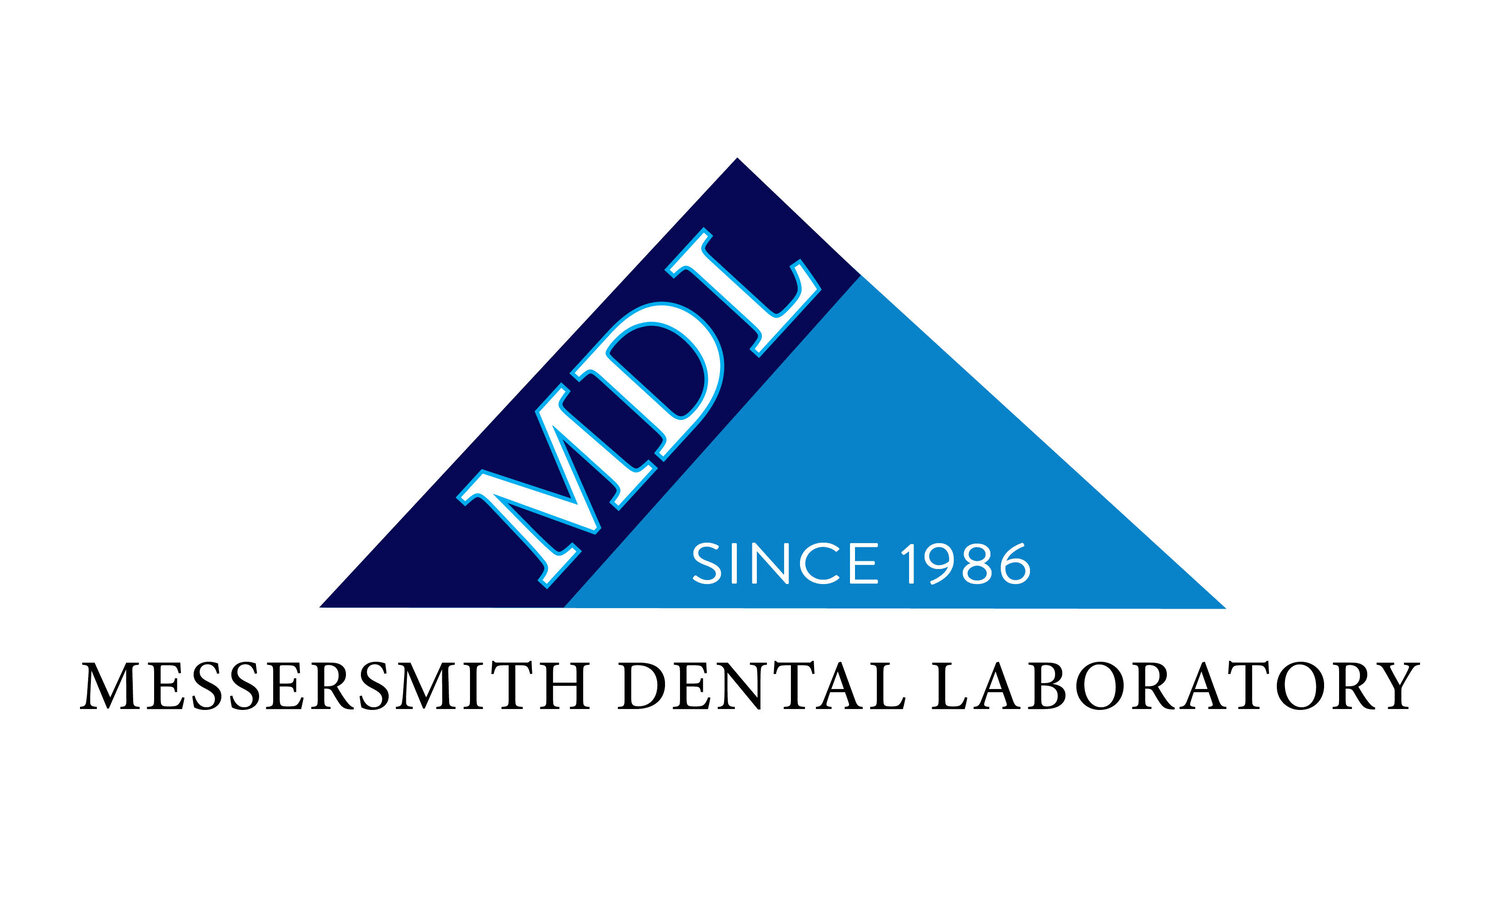 Messersmith Dental Laboratory